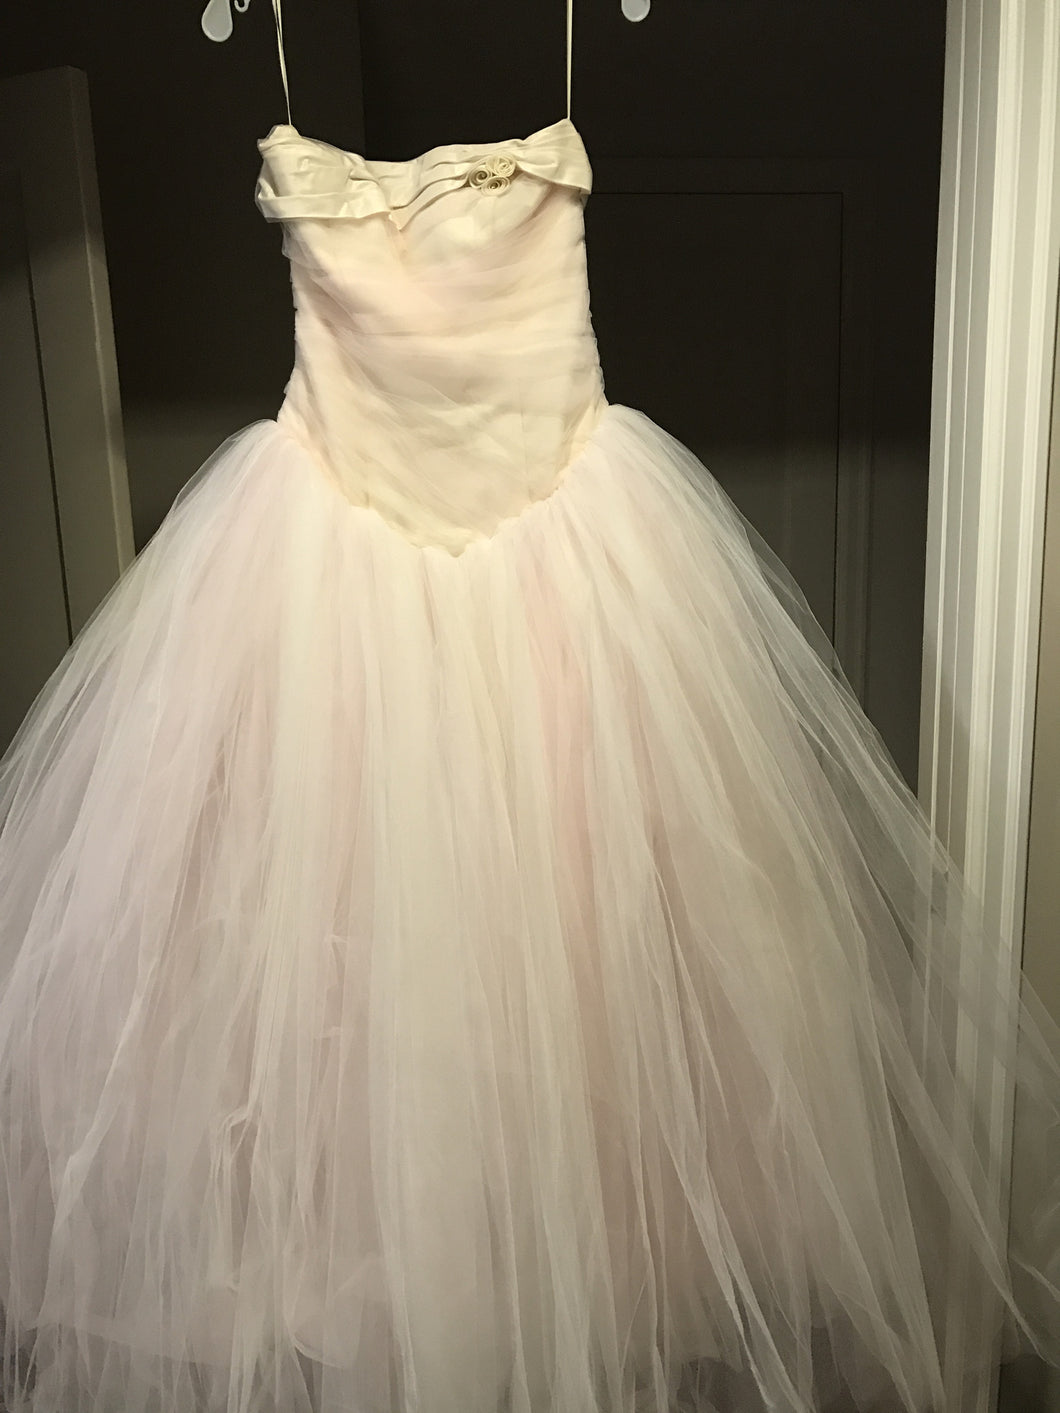 Edgardo Bonilla 'Clara' size 4 used wedding dress front view on hanger